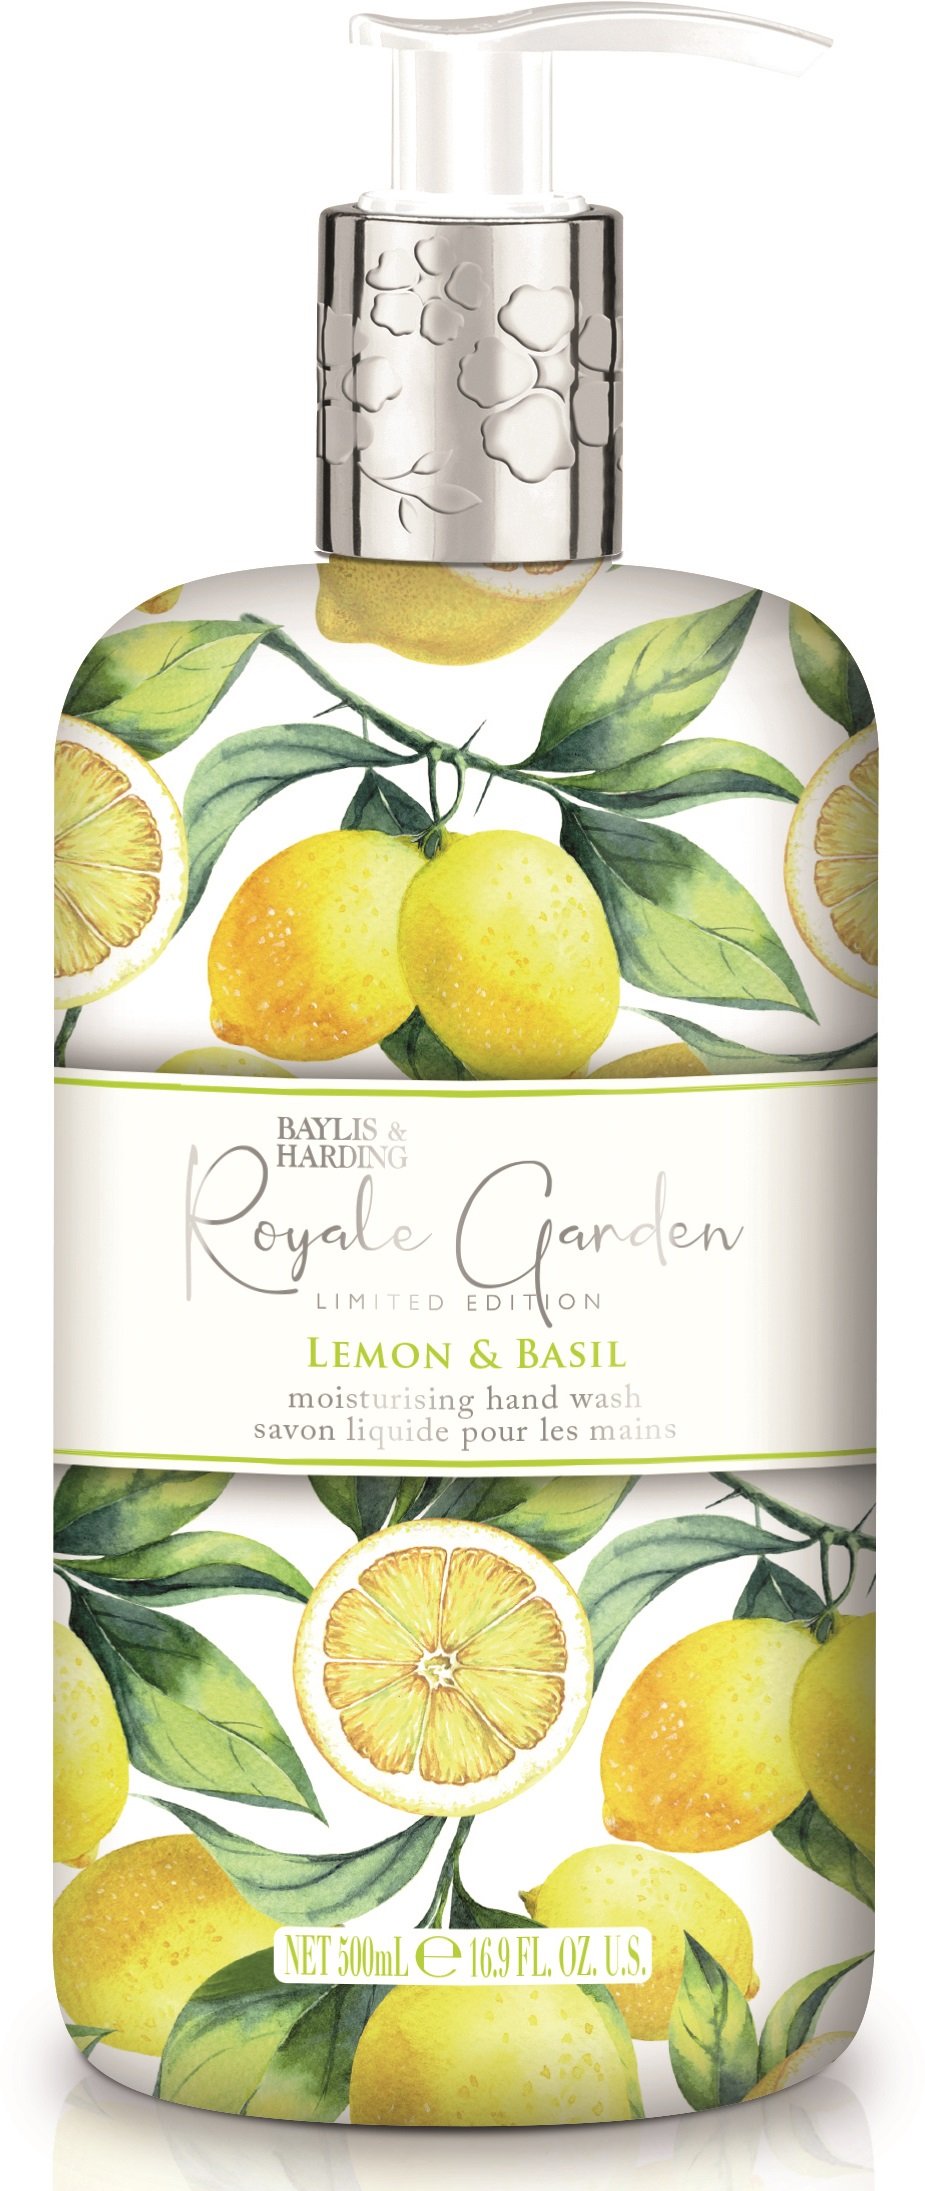 Baylis & Harding Royale Garden Lemon & Basil Hand Wash 500 ml